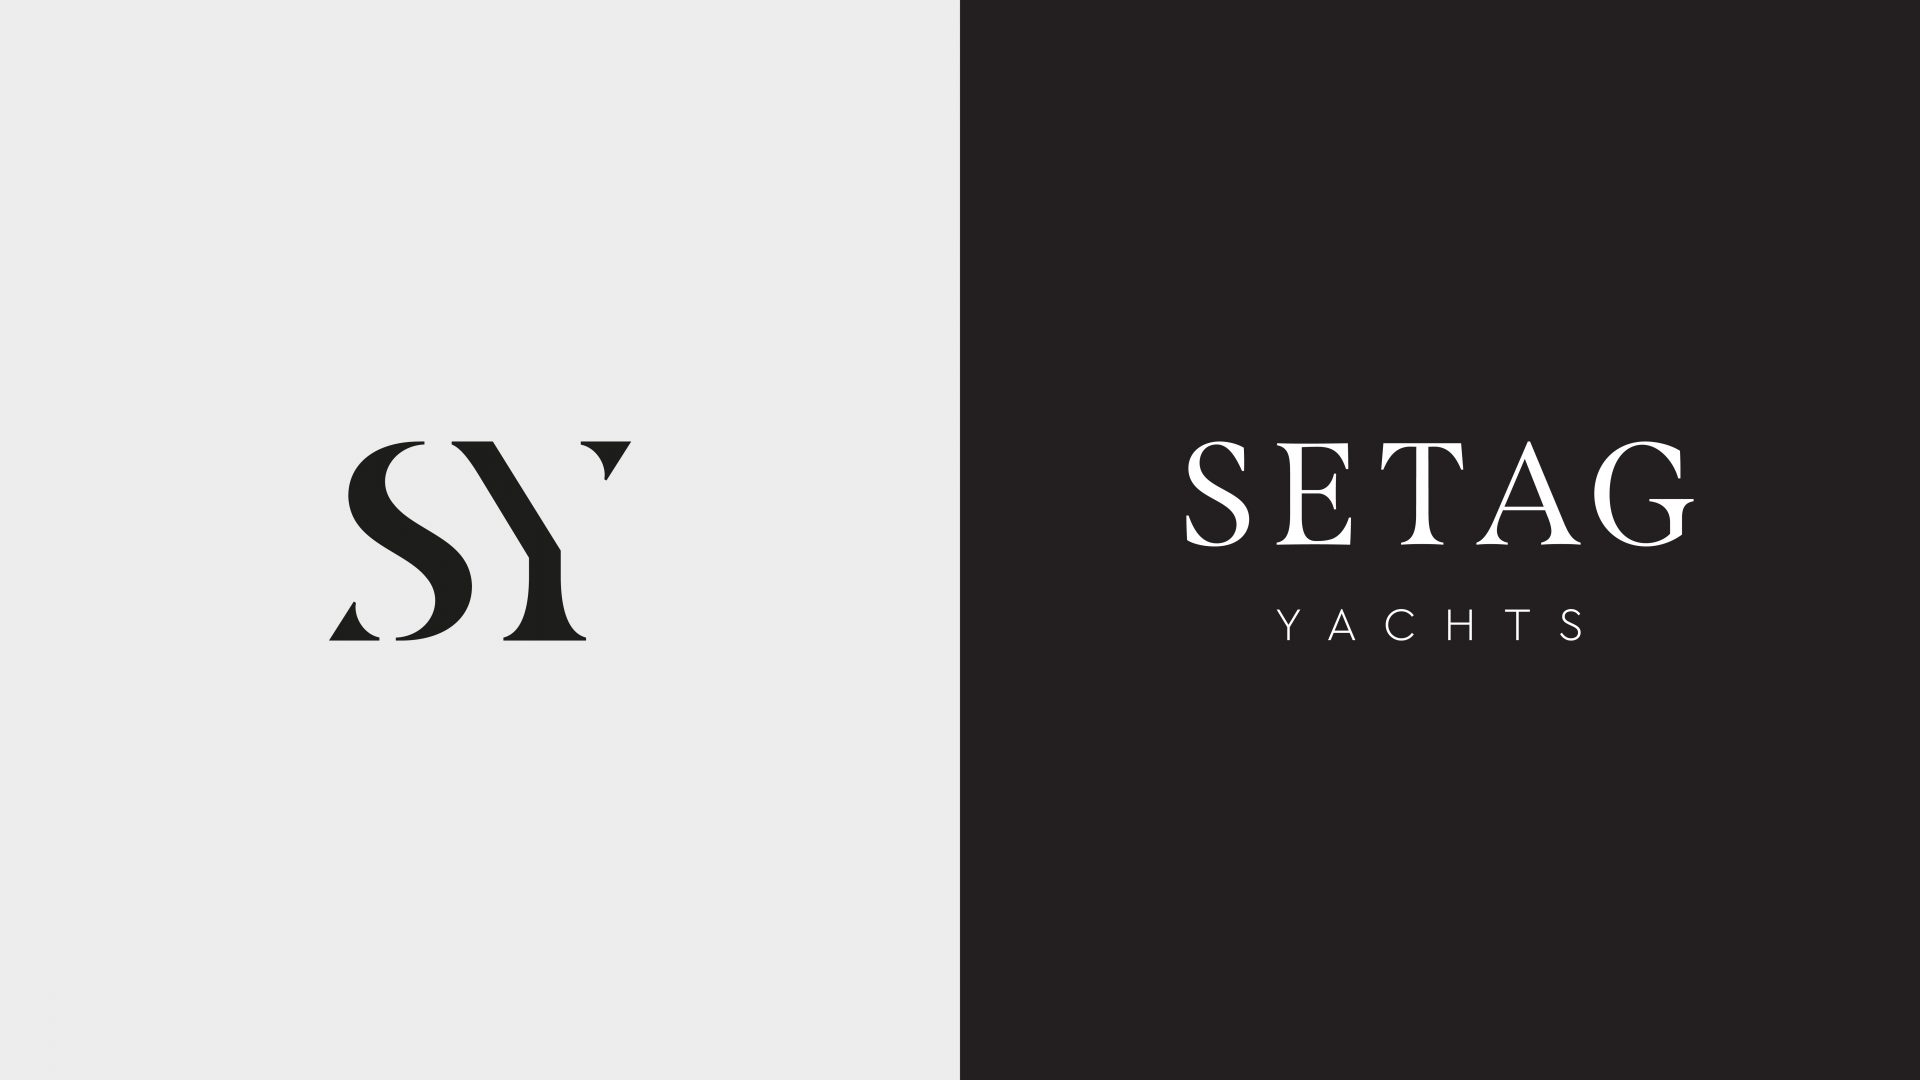 setag yachts logo and id mark